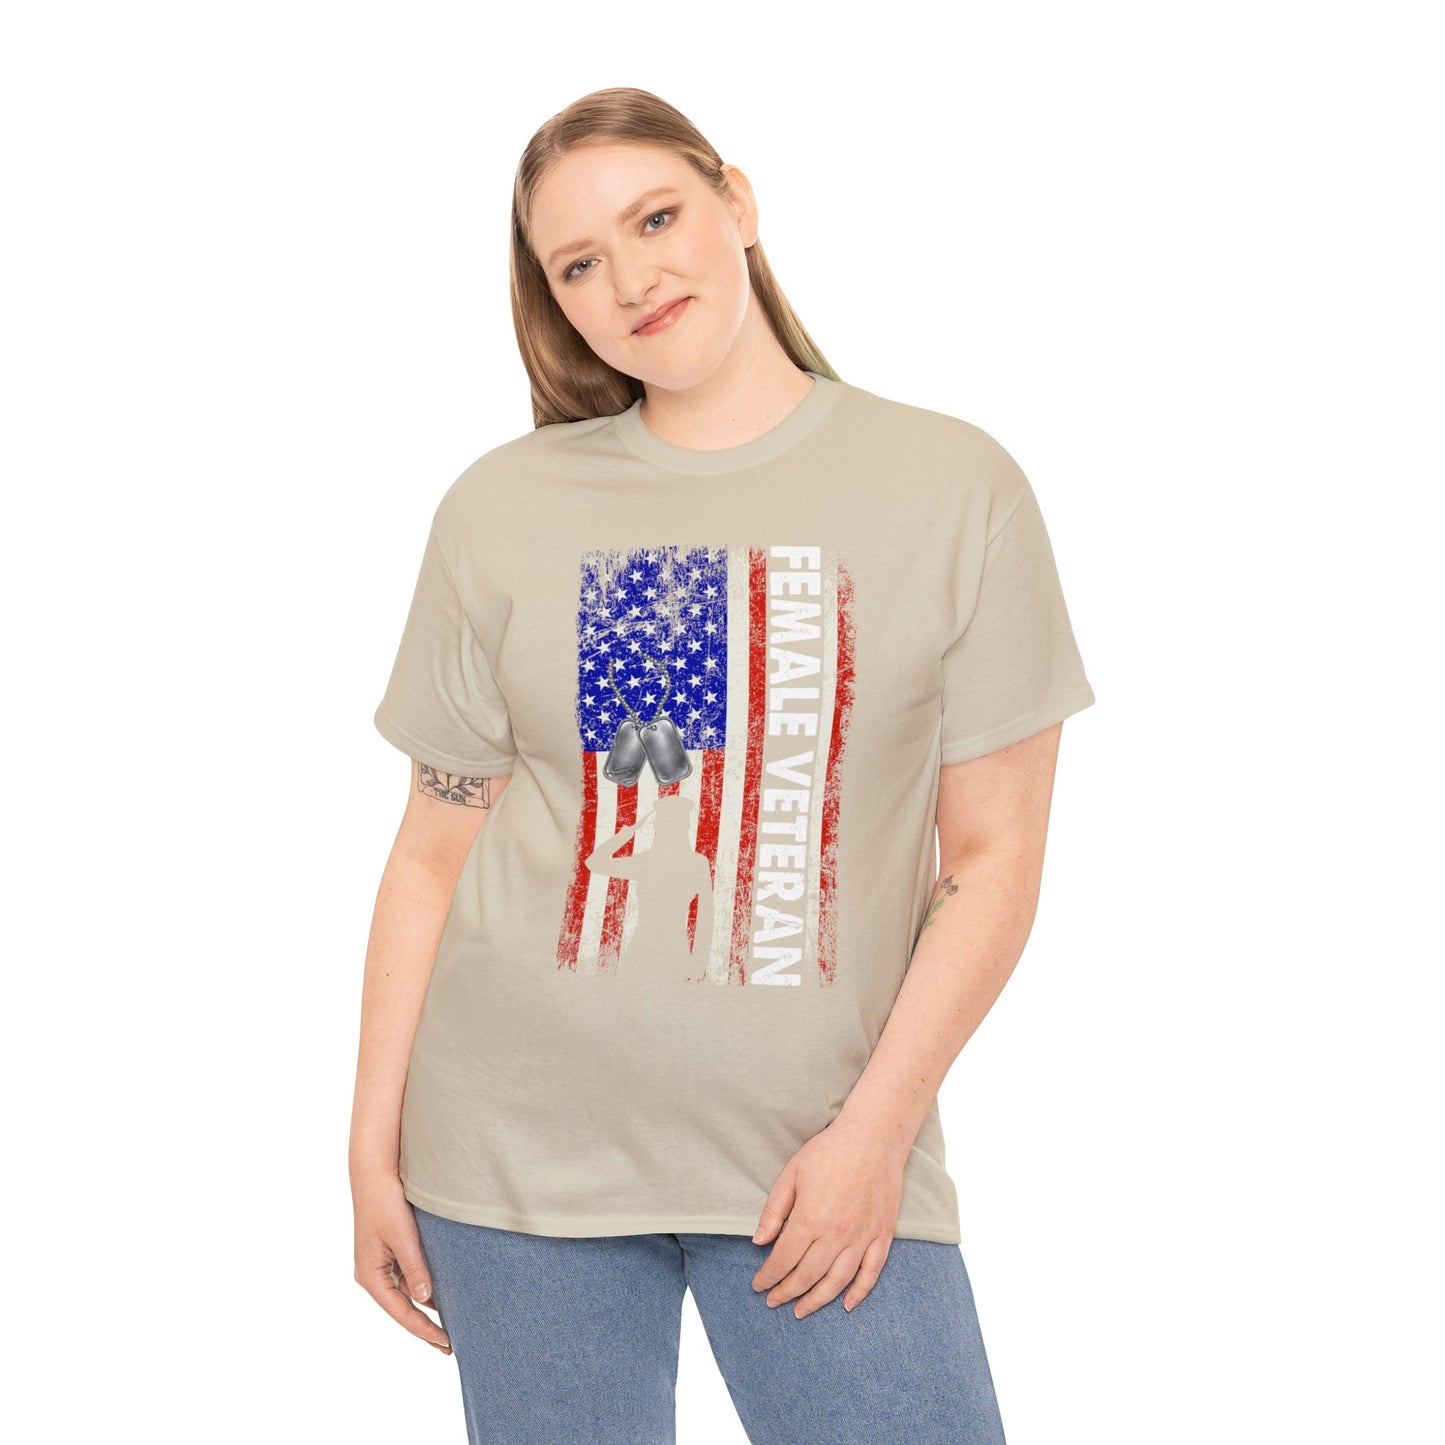 Army Female Veteran Tshirt - Salute Standing Woman